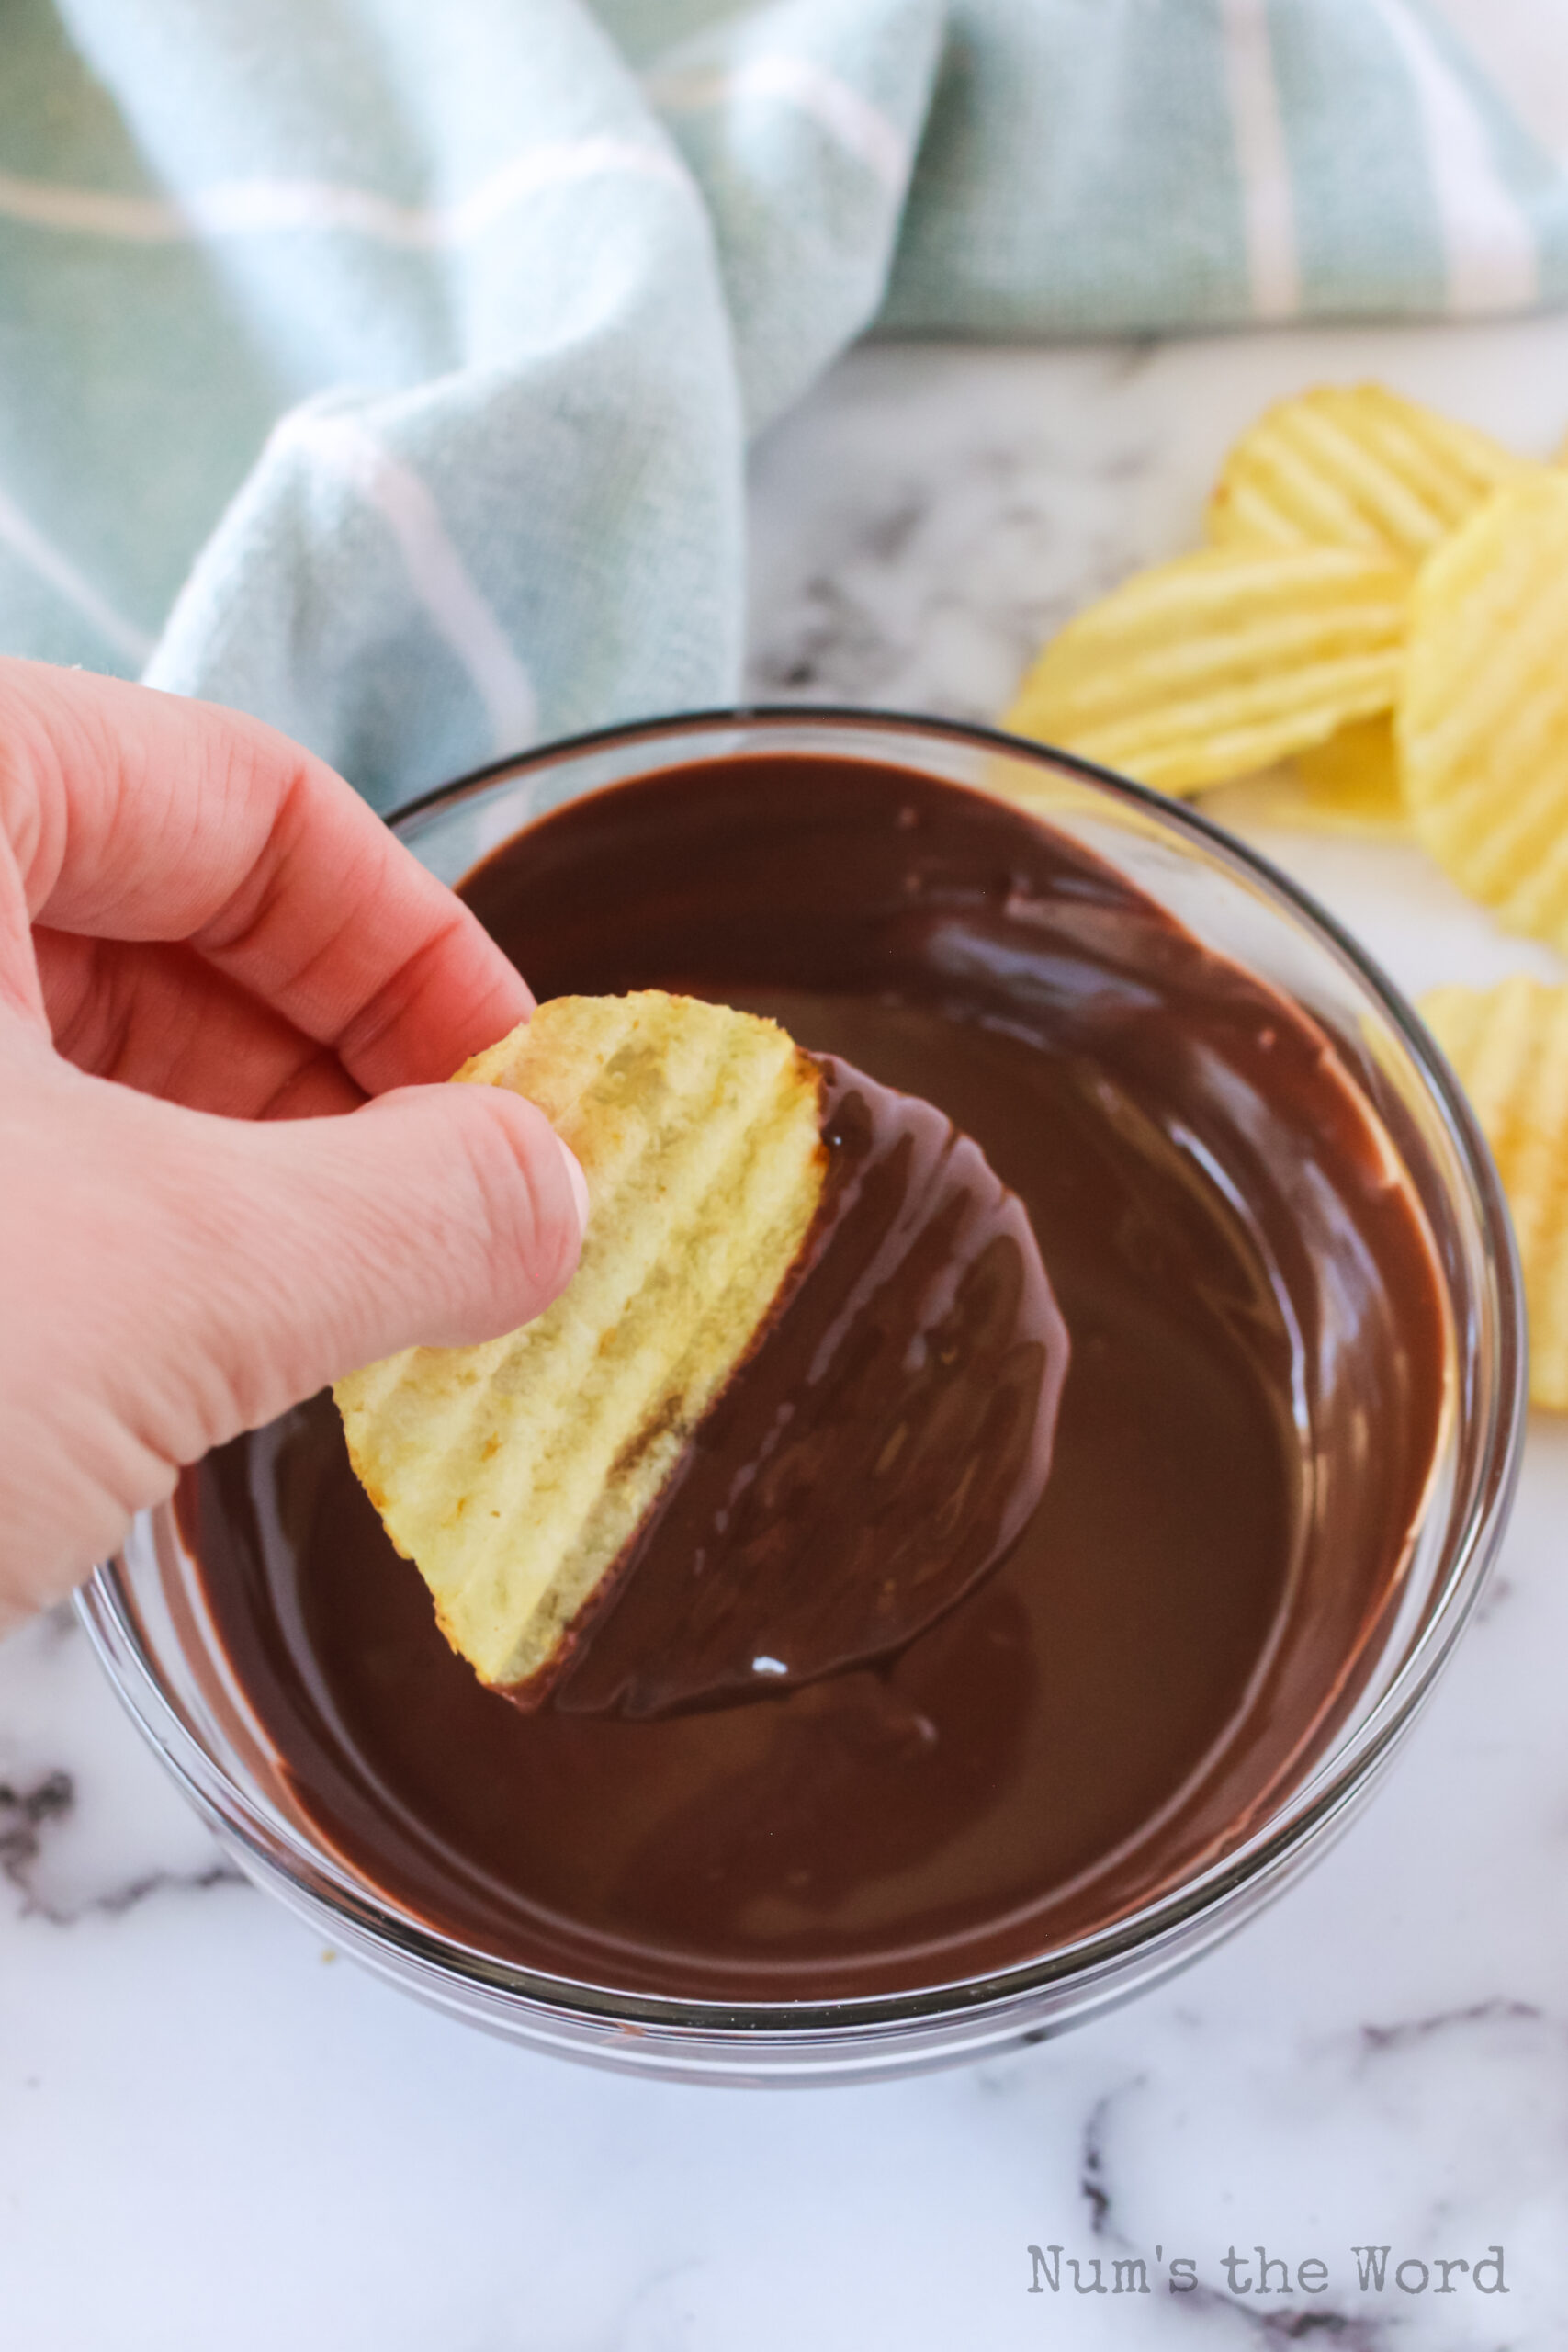 potato chip dipped into chocolate